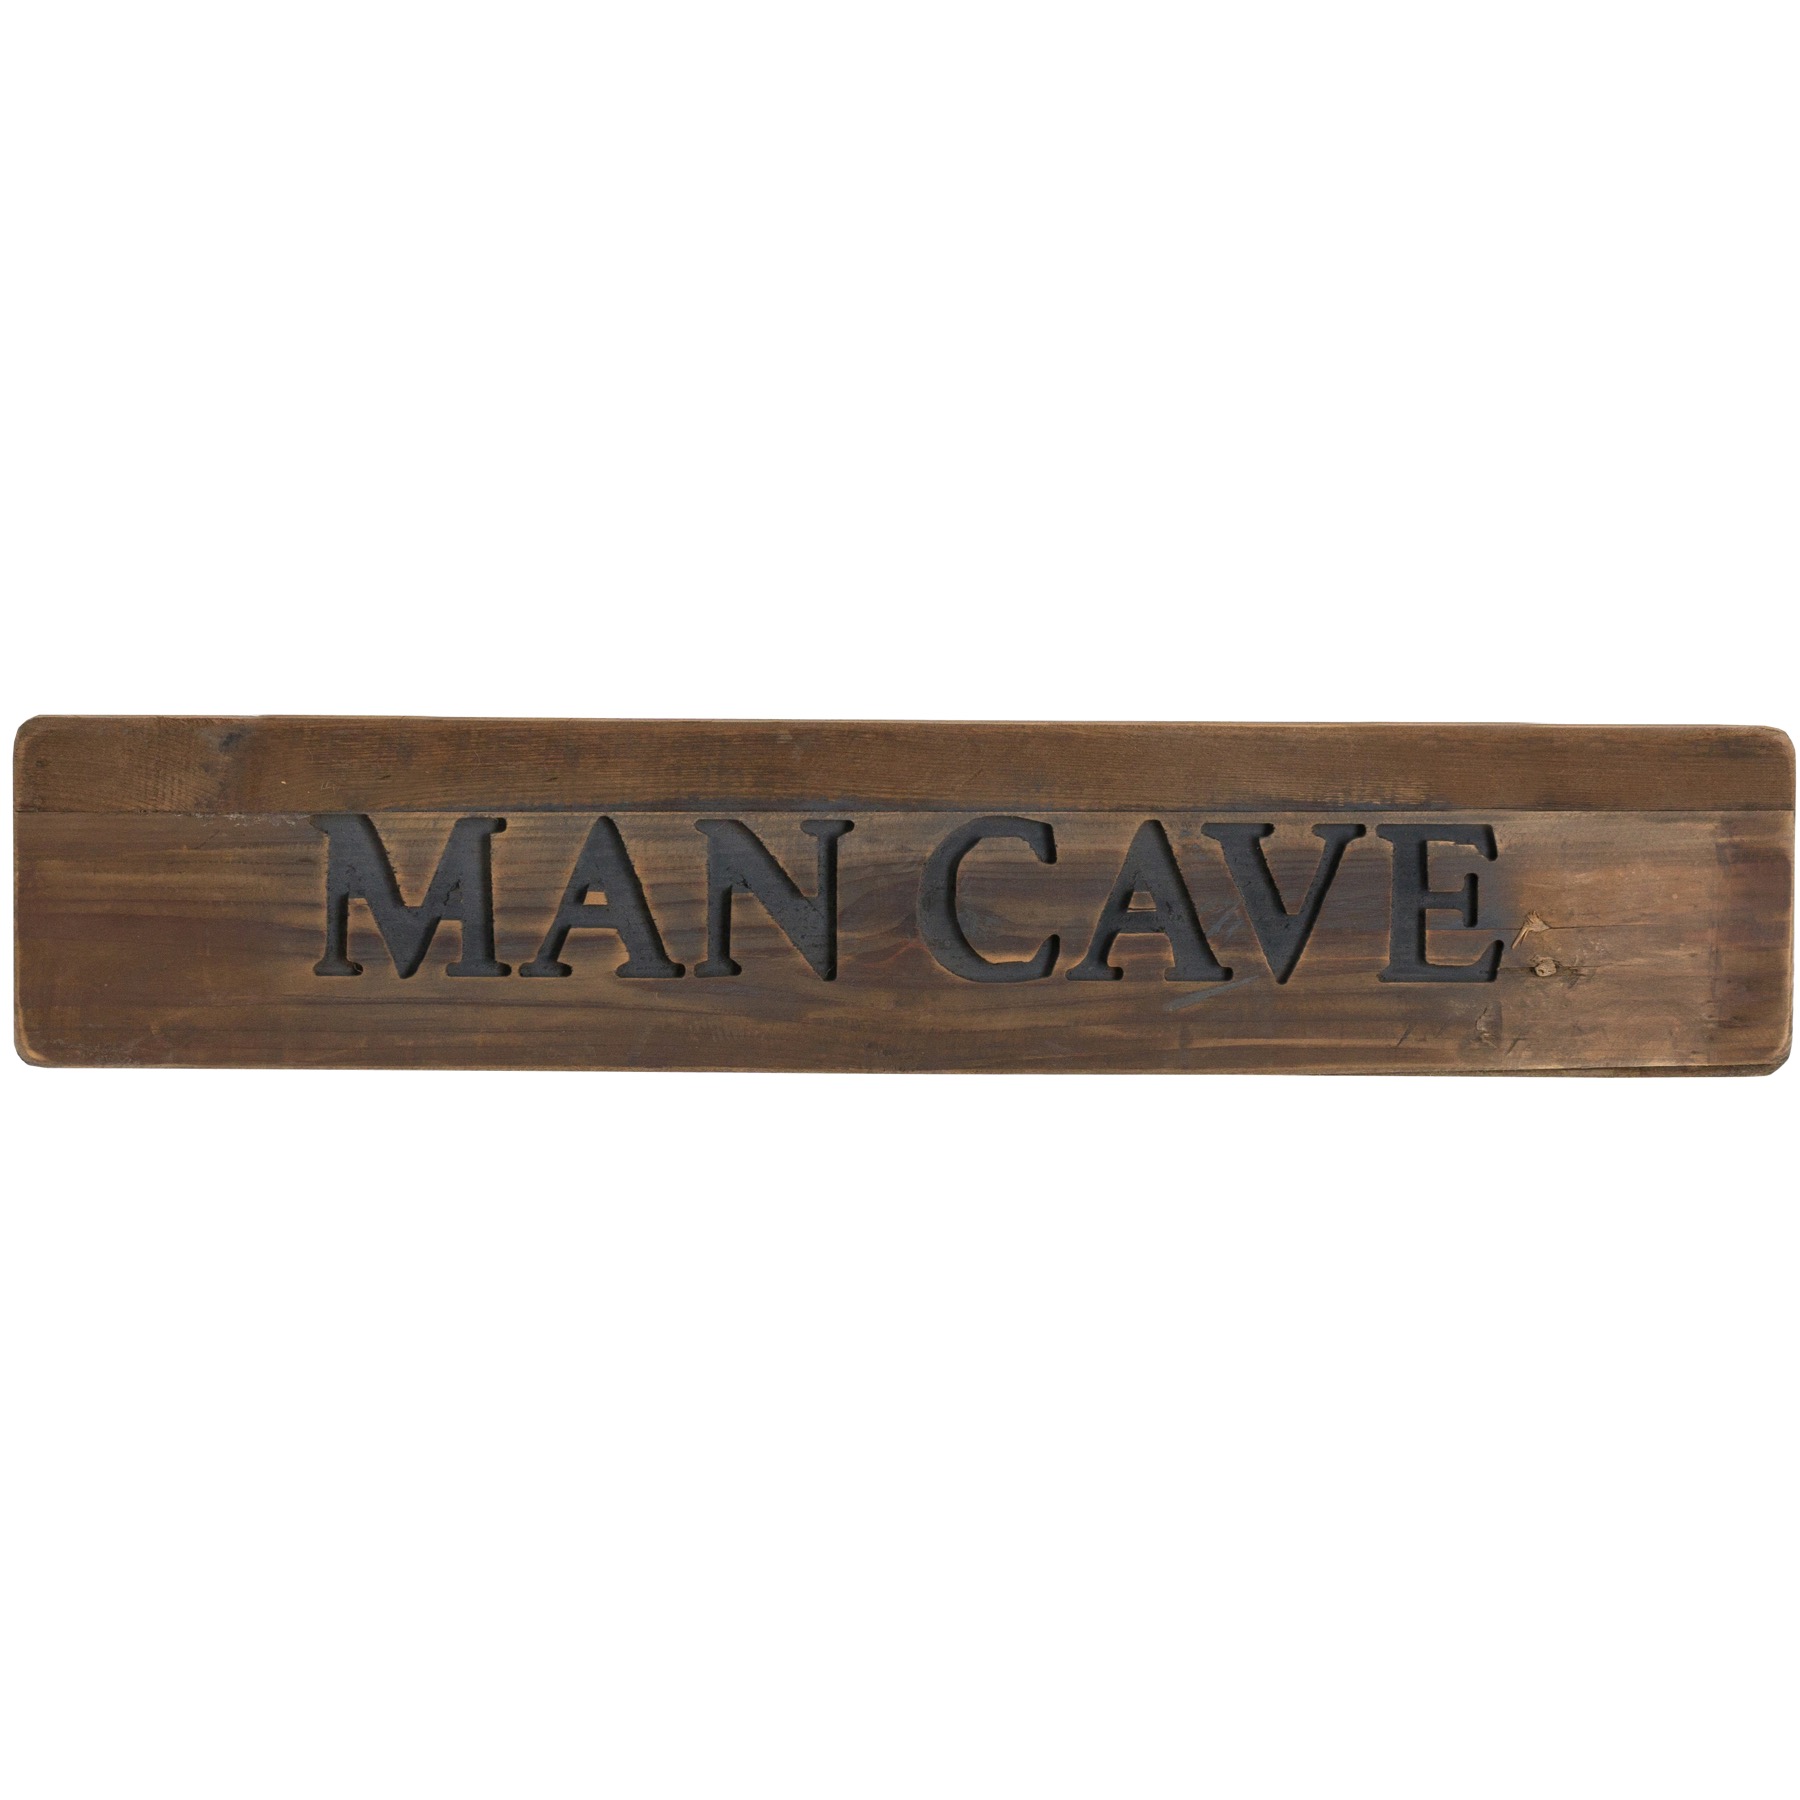 Man Cave Rustic Wooden Message Plaque - Image 1